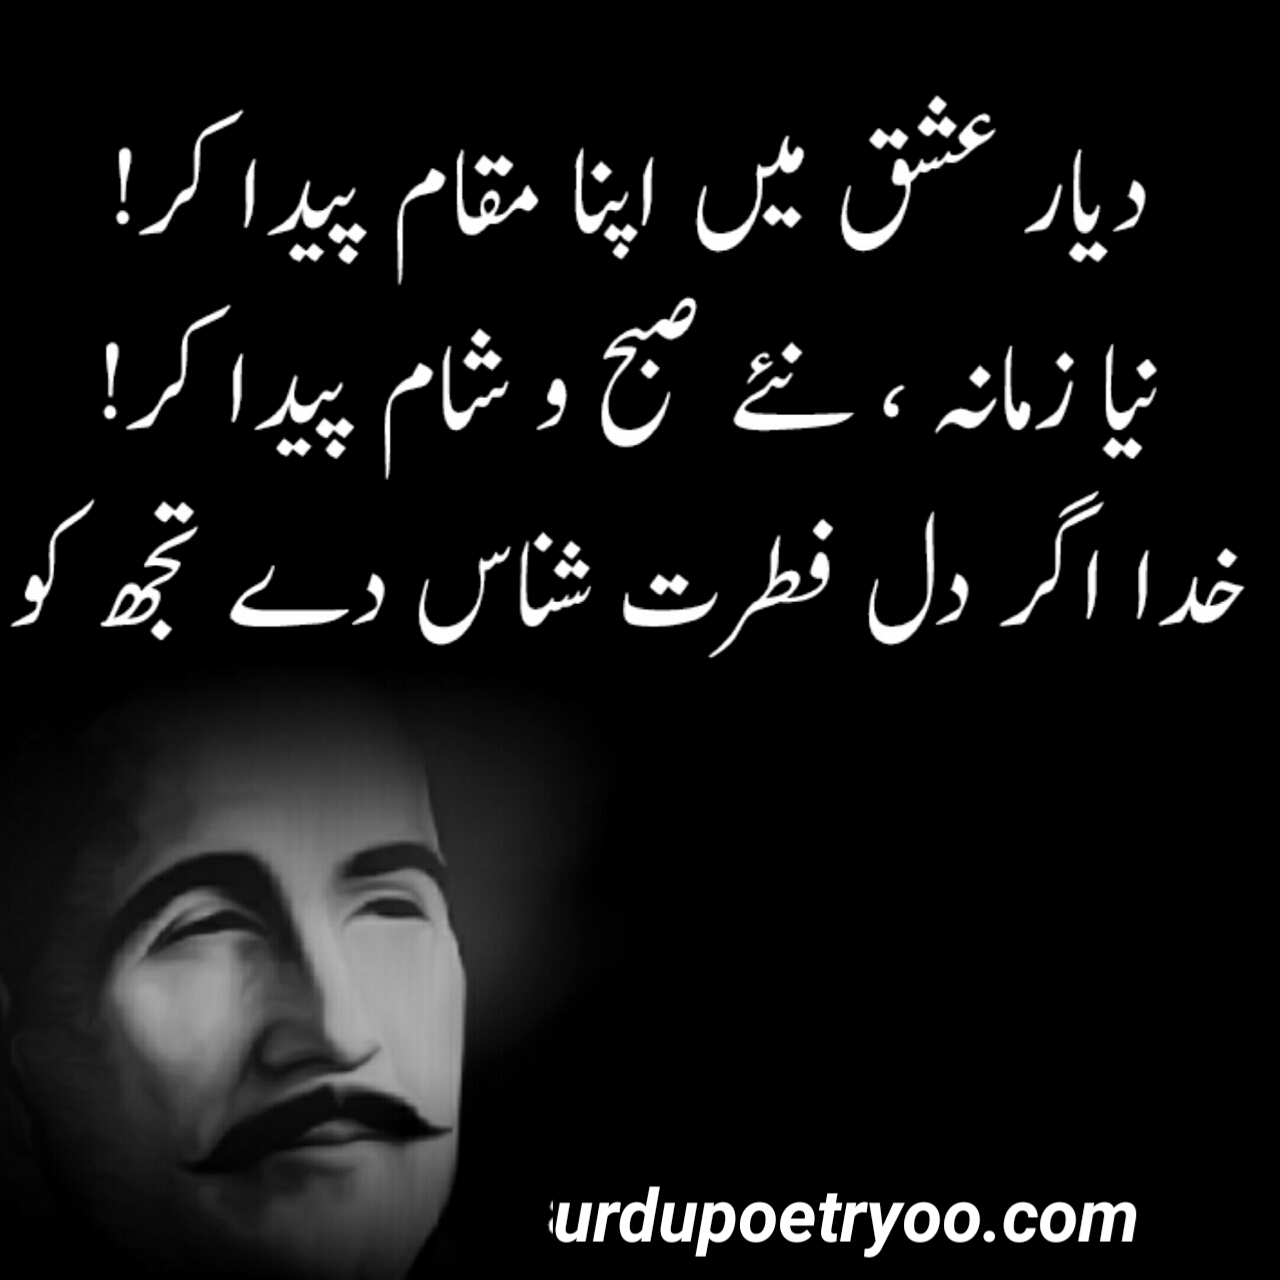 Allama Iqbal poetry| Allama Iqbal urdu poetry